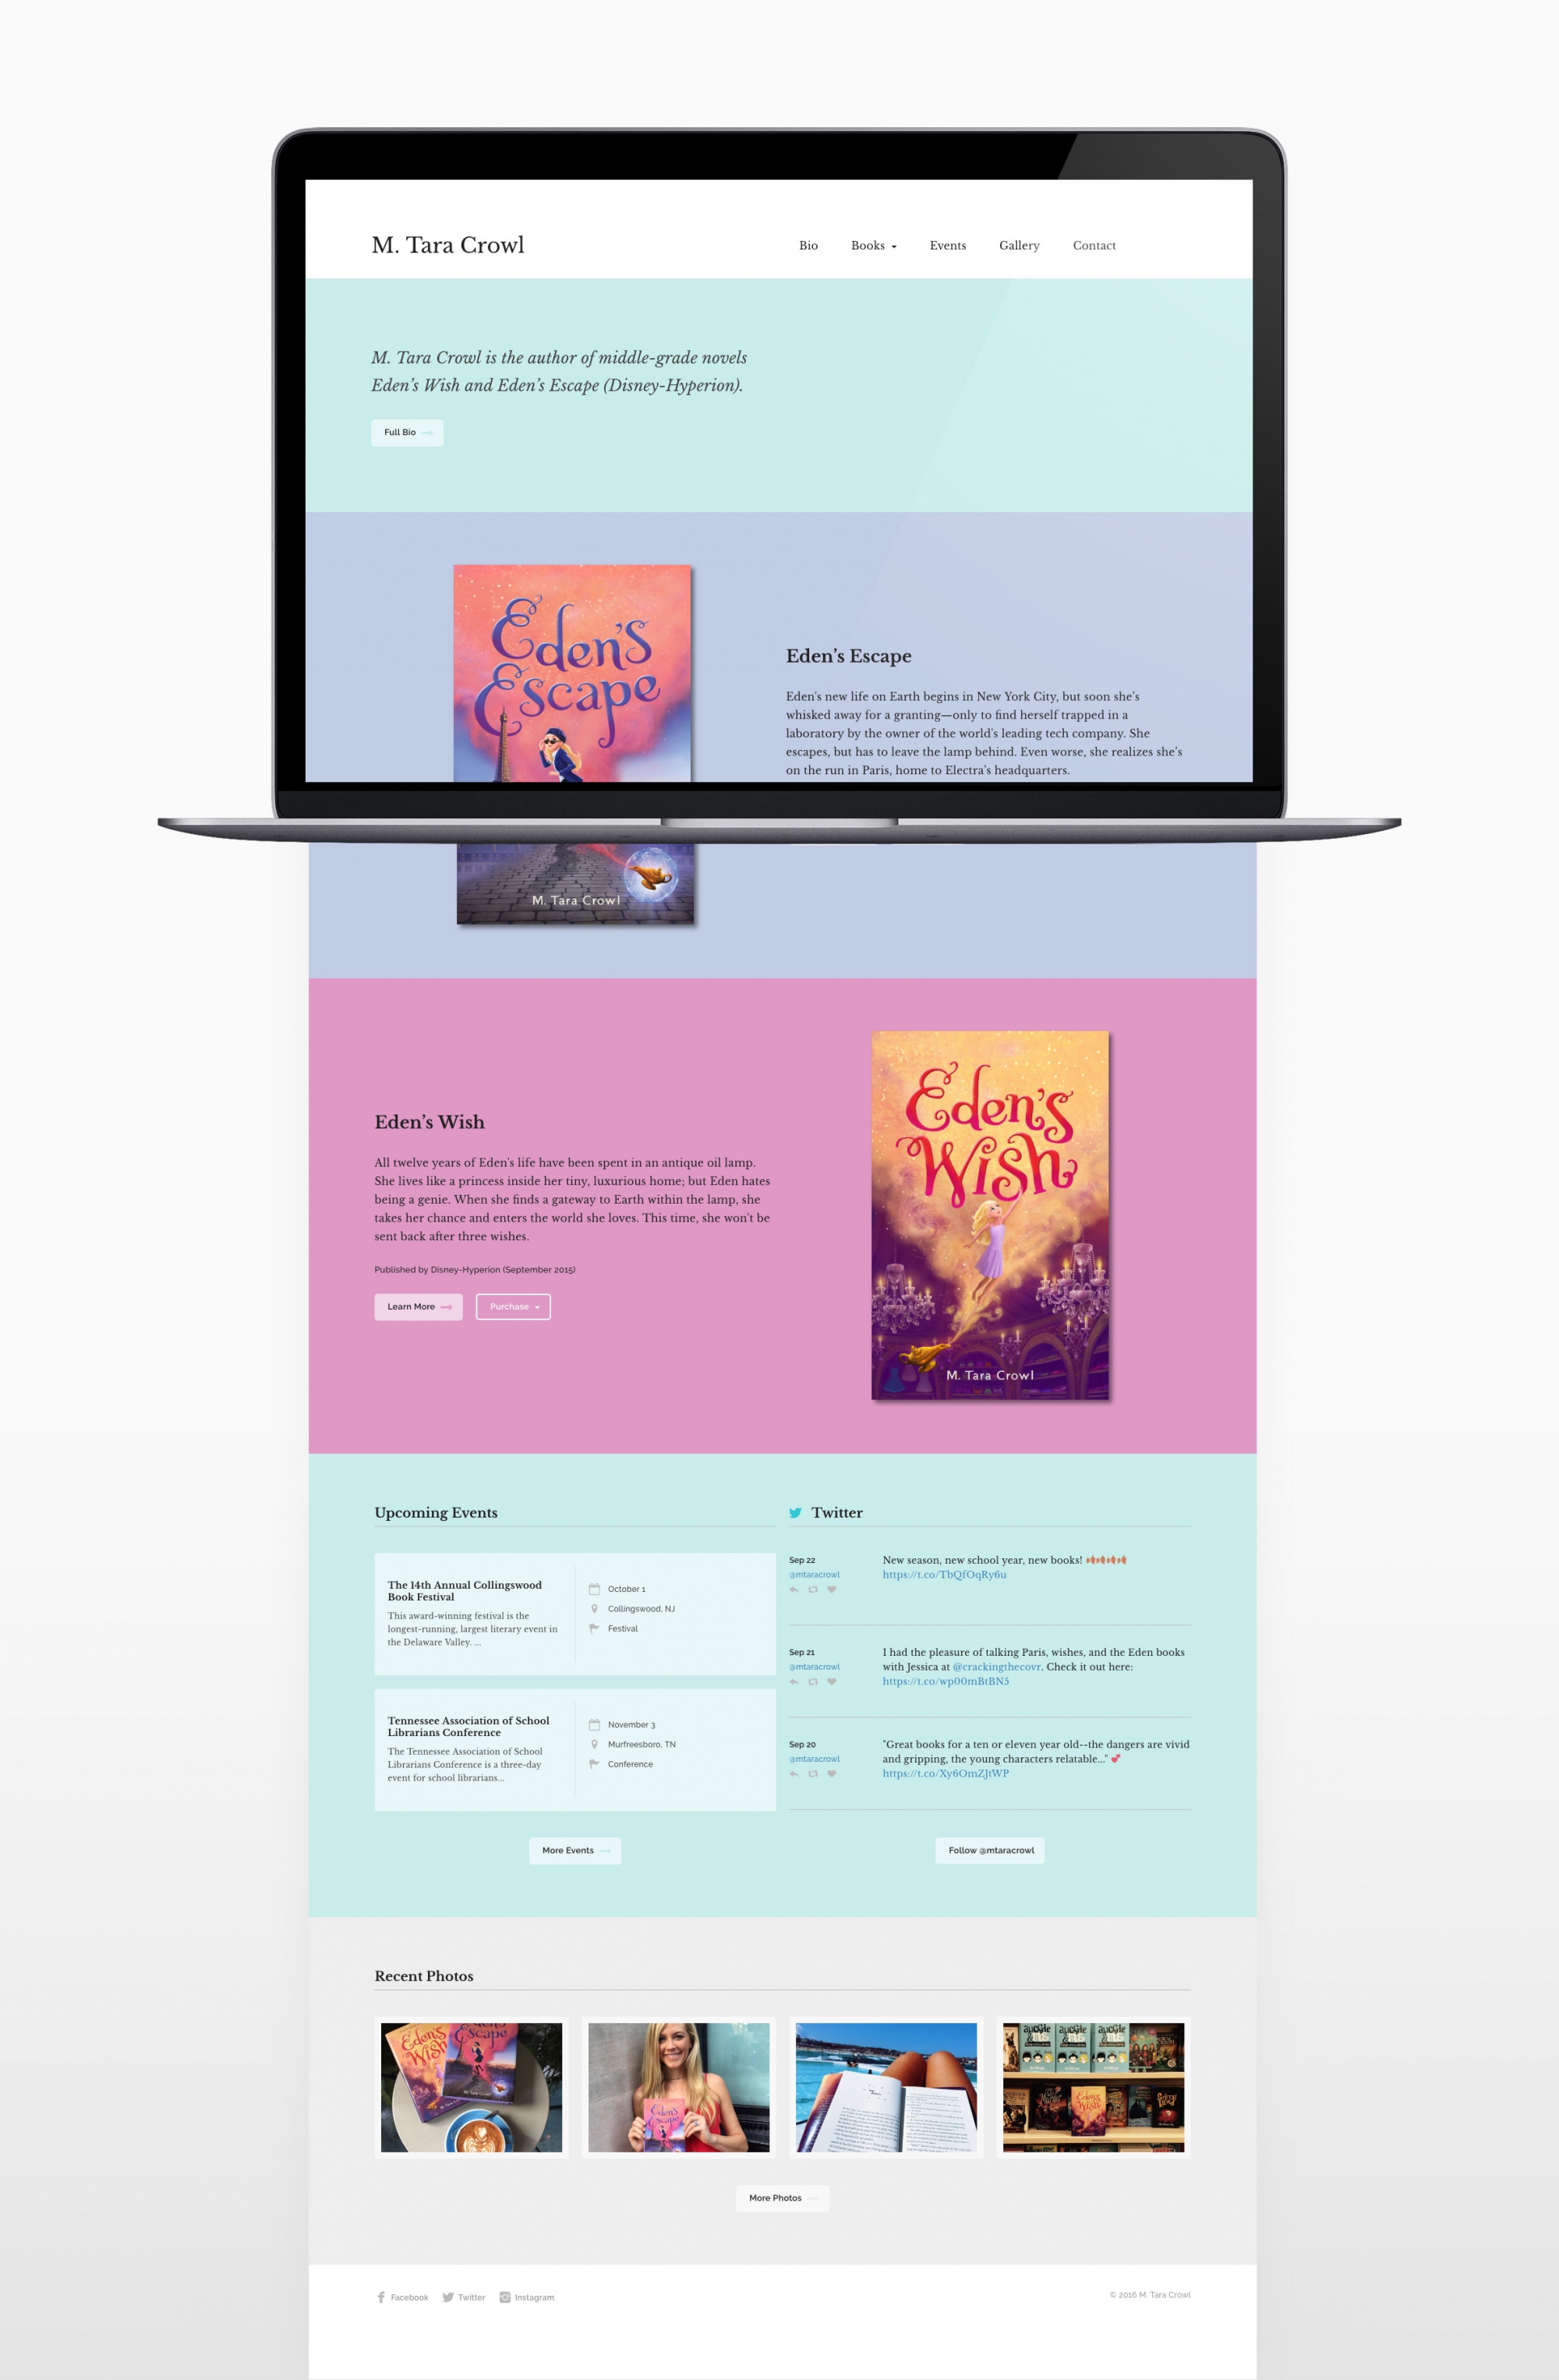 M. Tara Crowl responsive web design by Ryan Paonessa